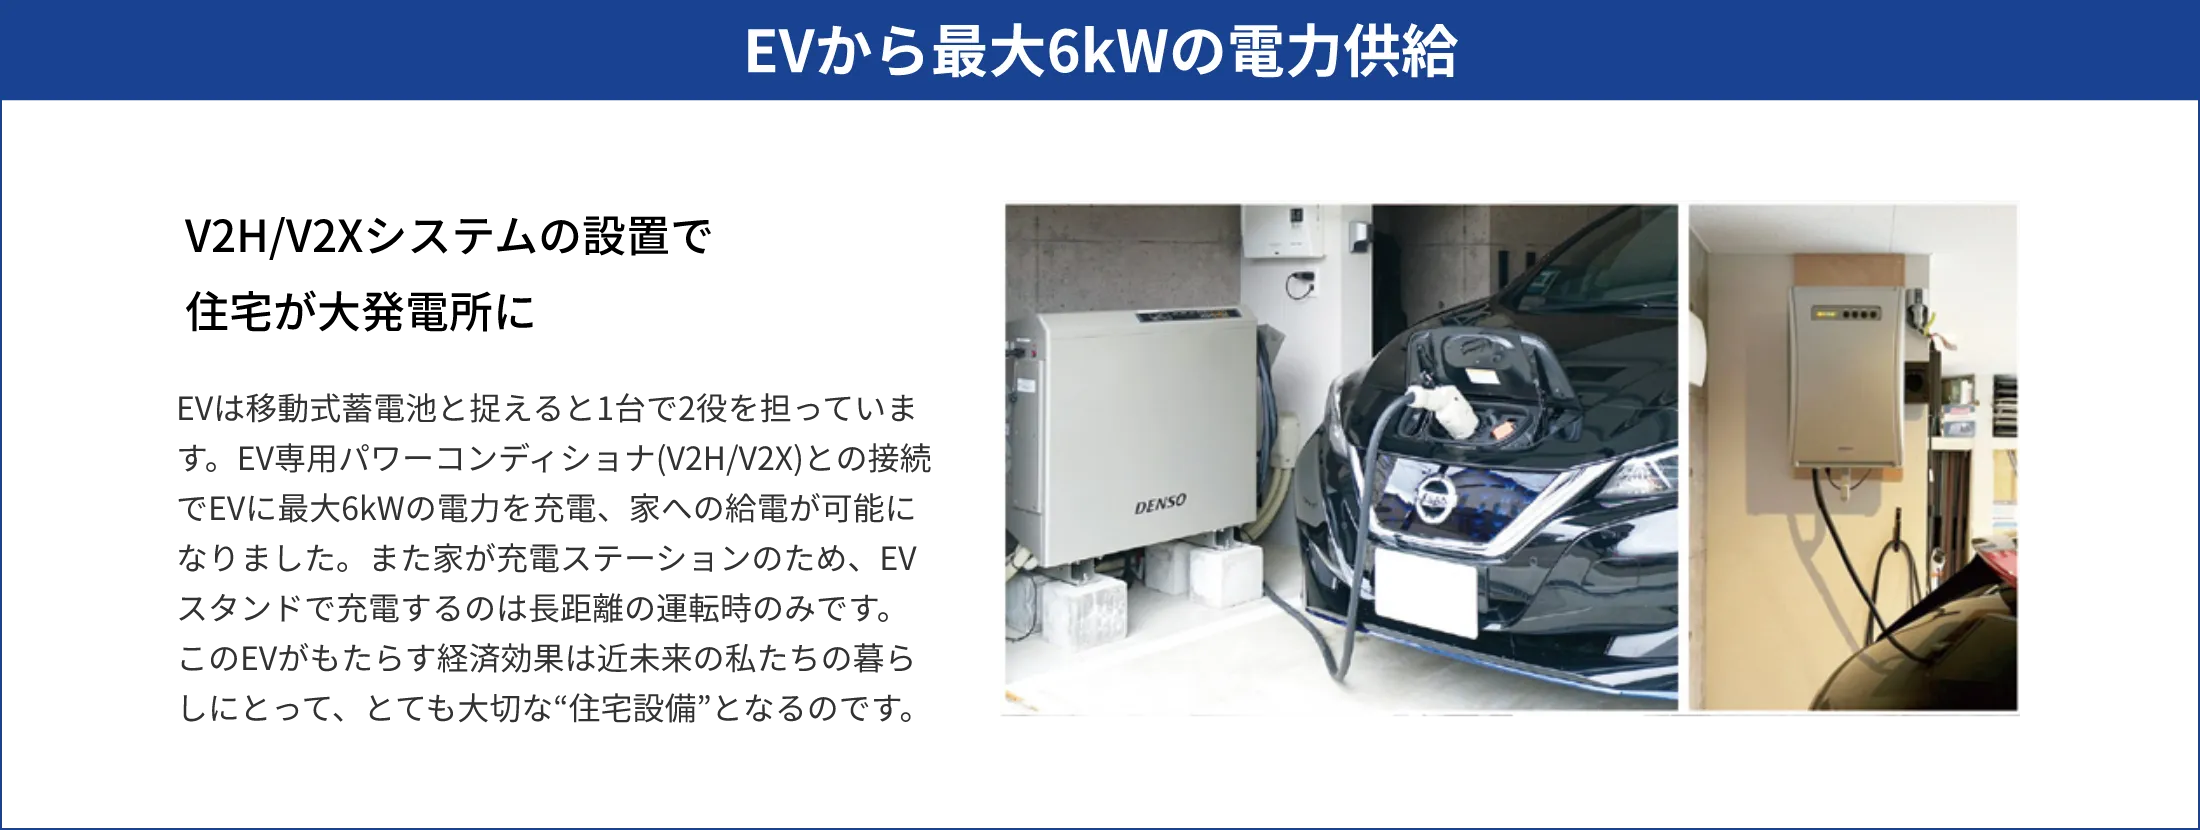 EVから最大6kWの電力供給